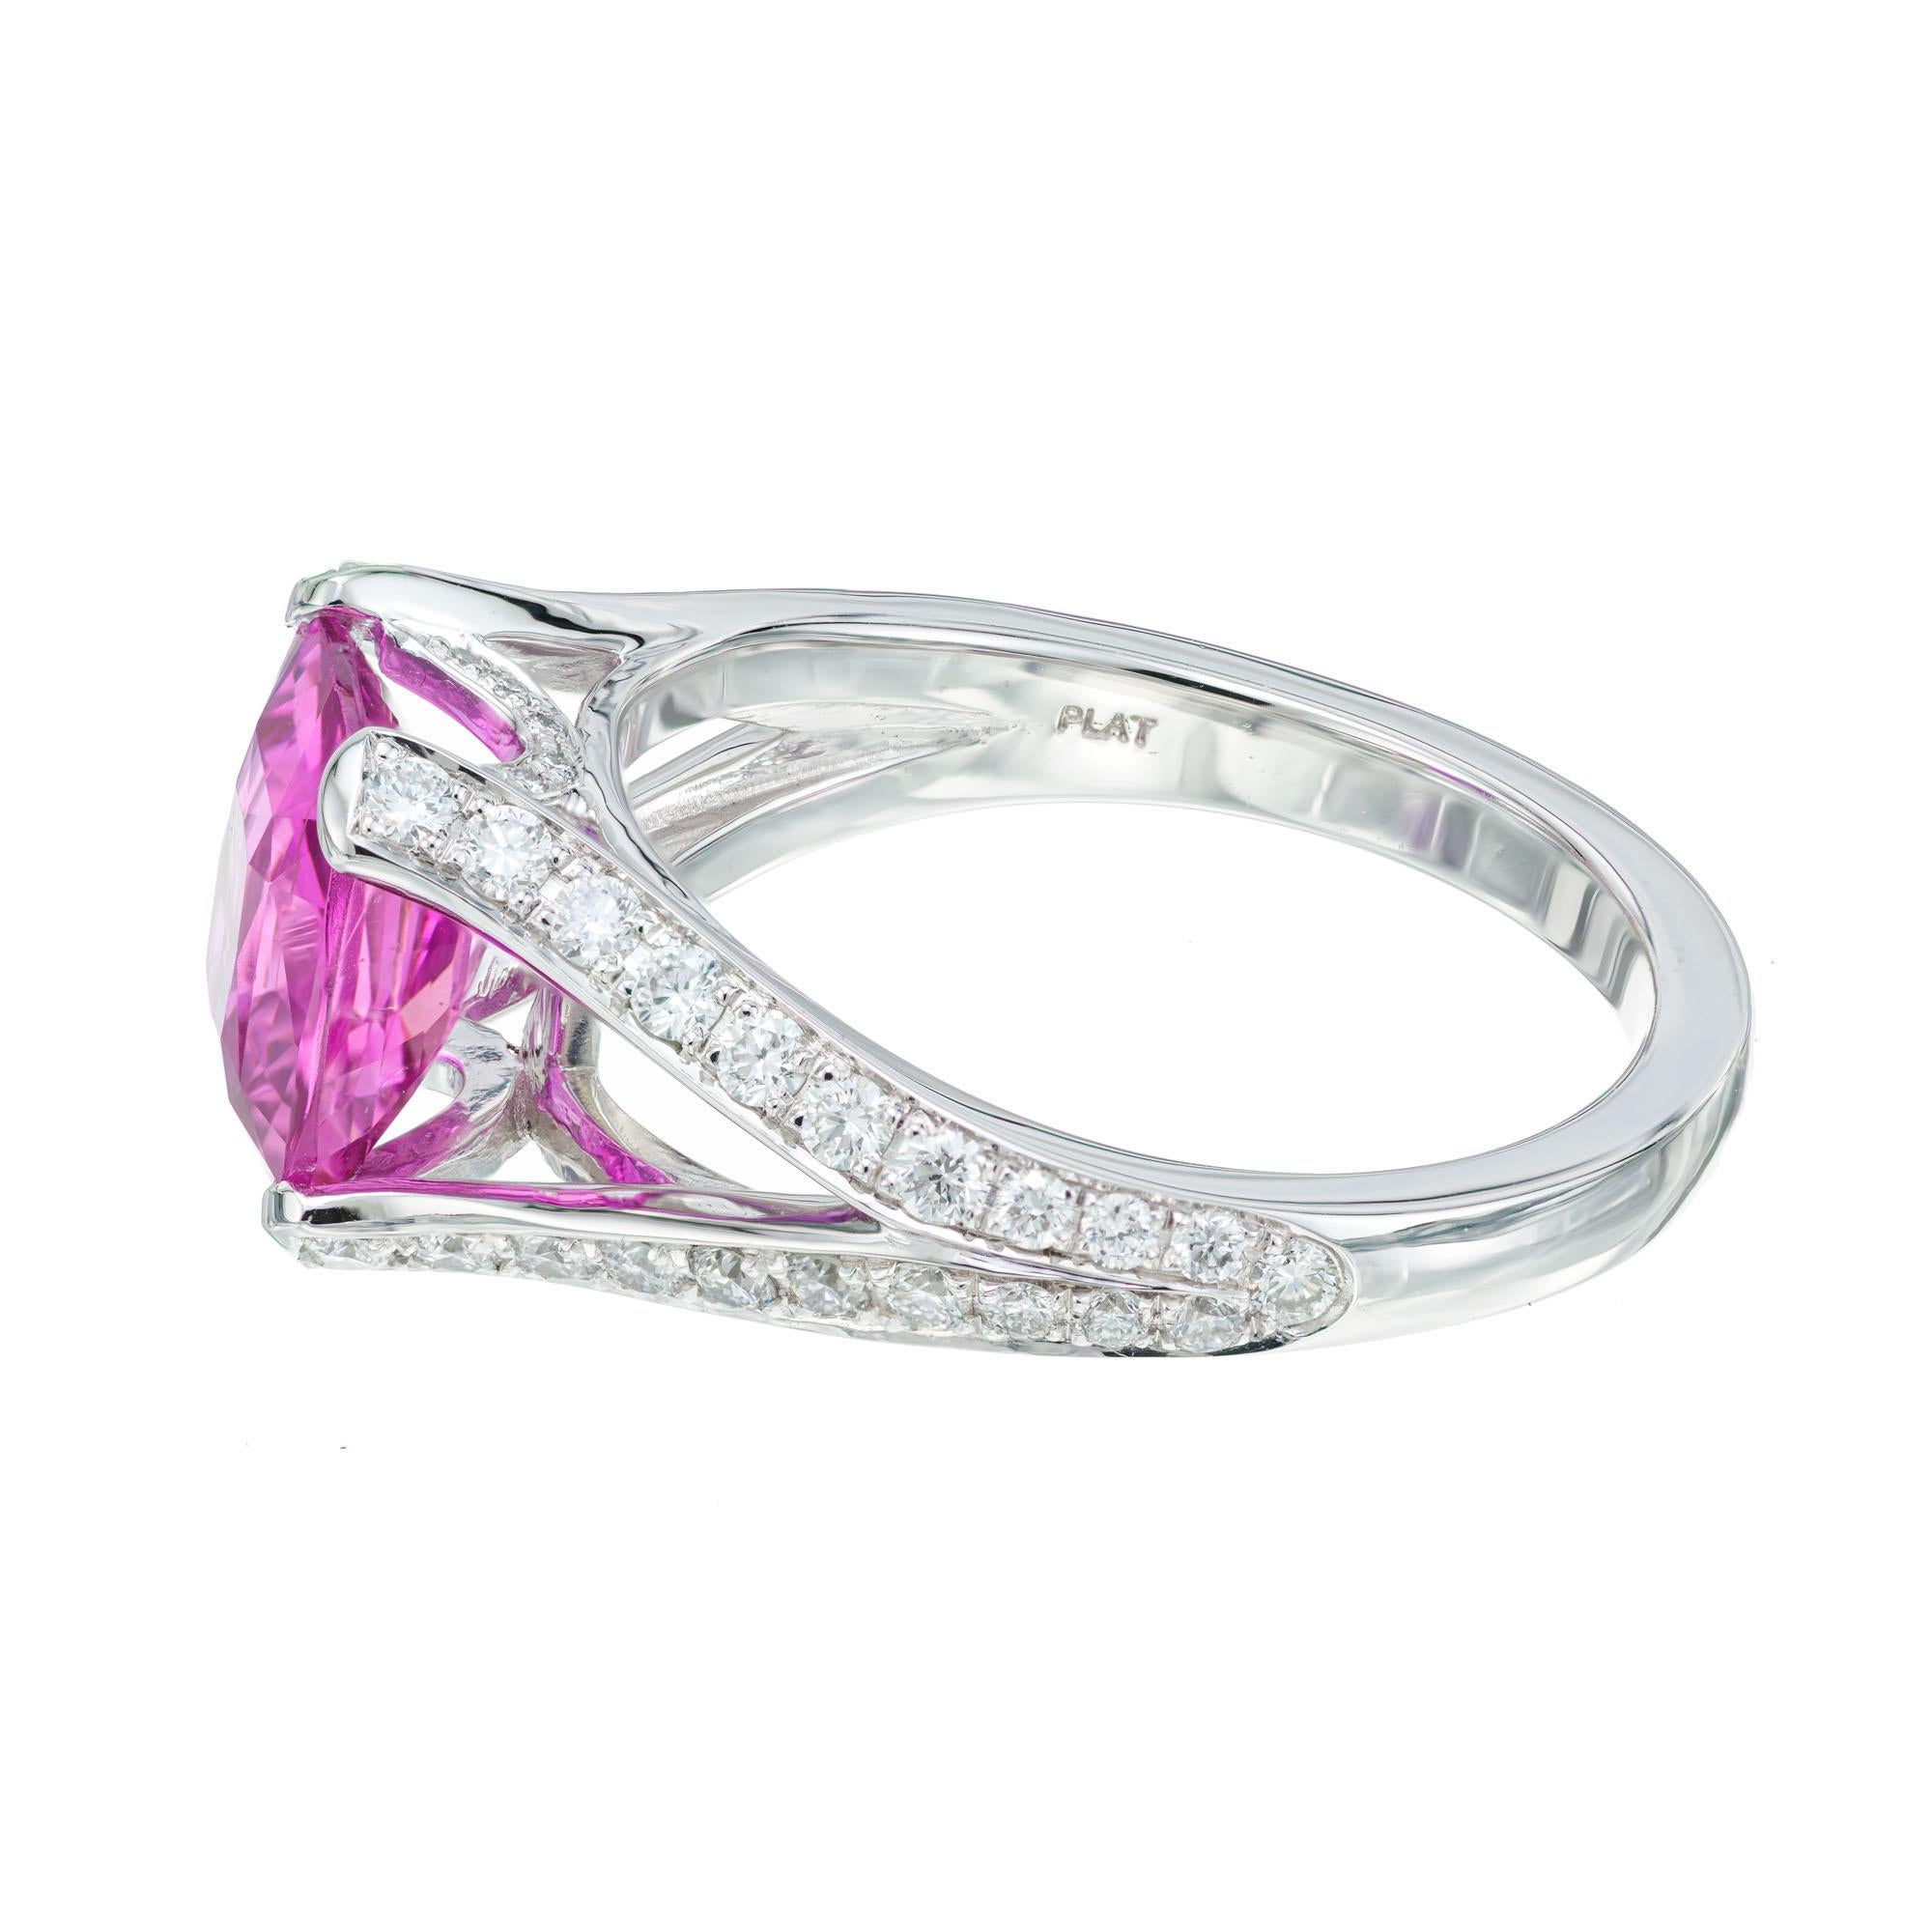 Peter Suchy GIA 2.76 Carat Cushion Cut Sapphire Diamond Platinum Engagement Ring For Sale 1